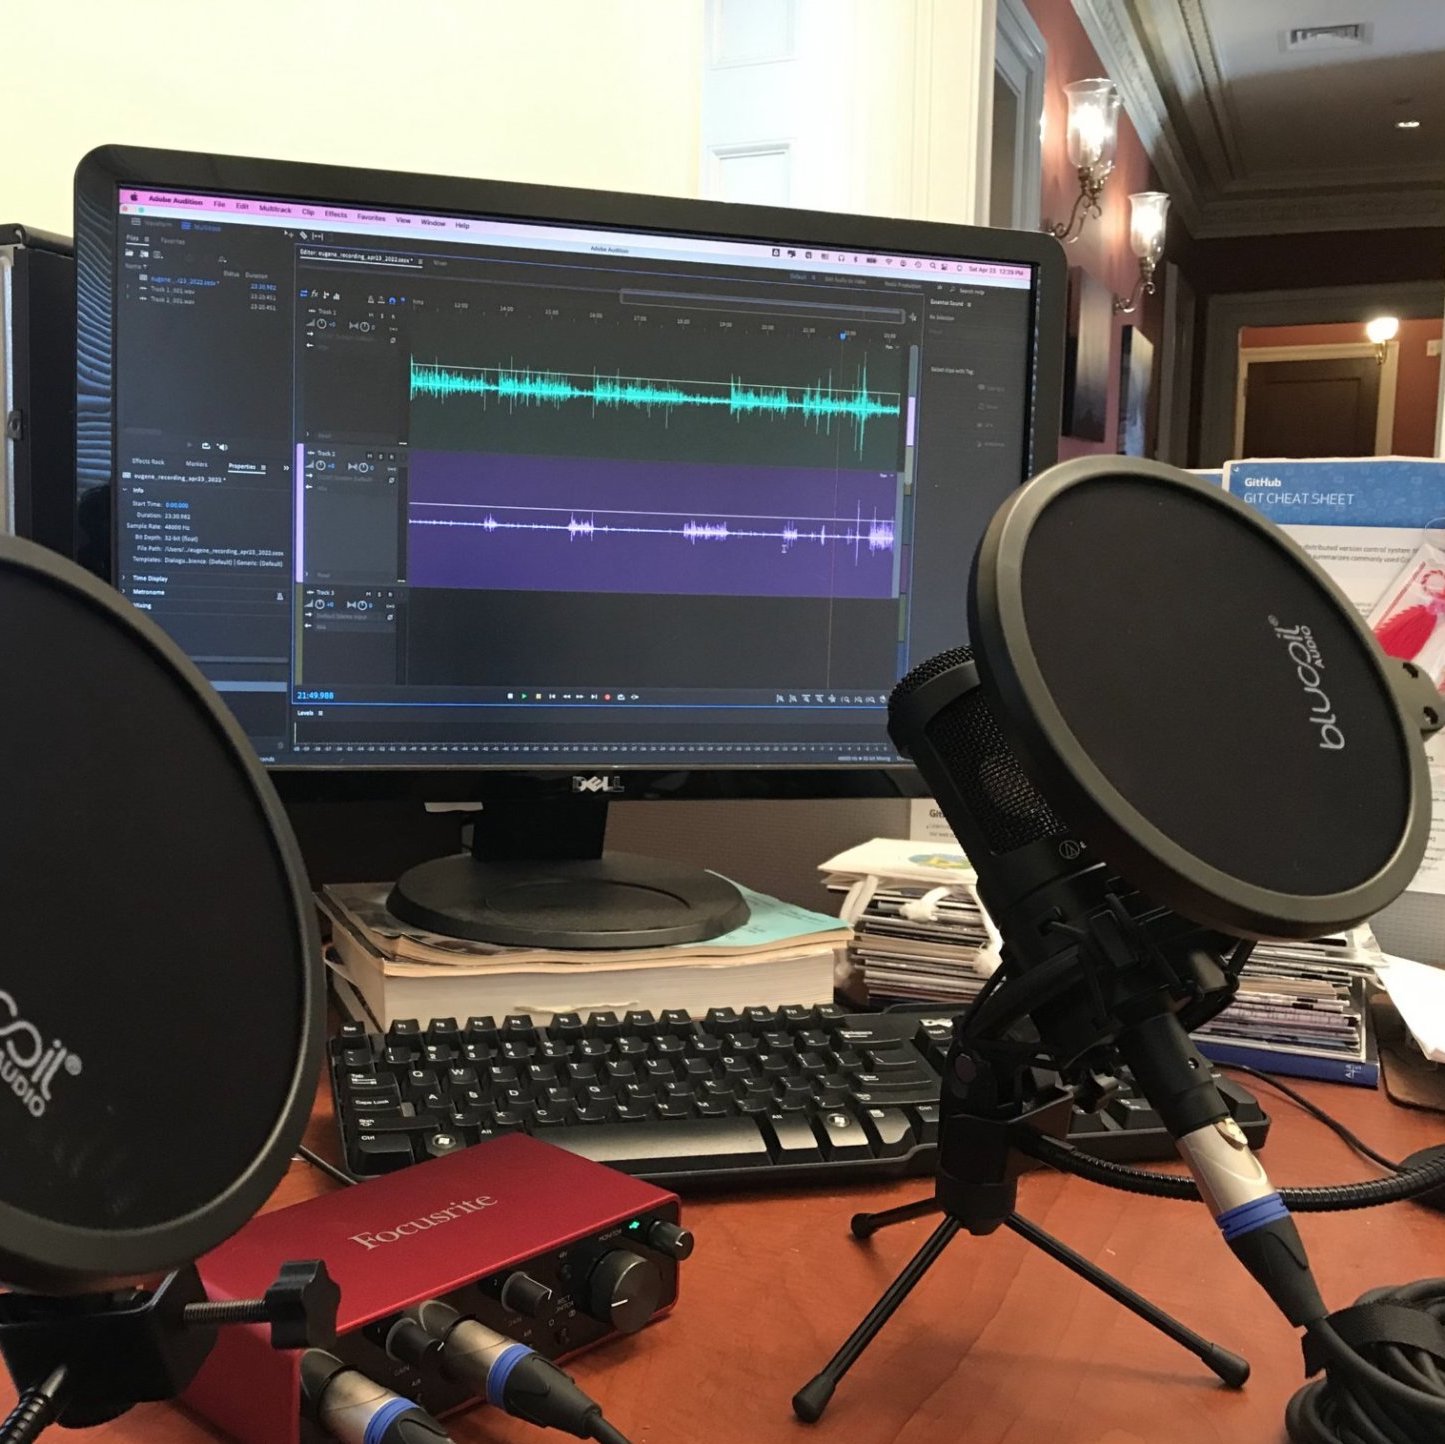 Podcast Recording Equipment